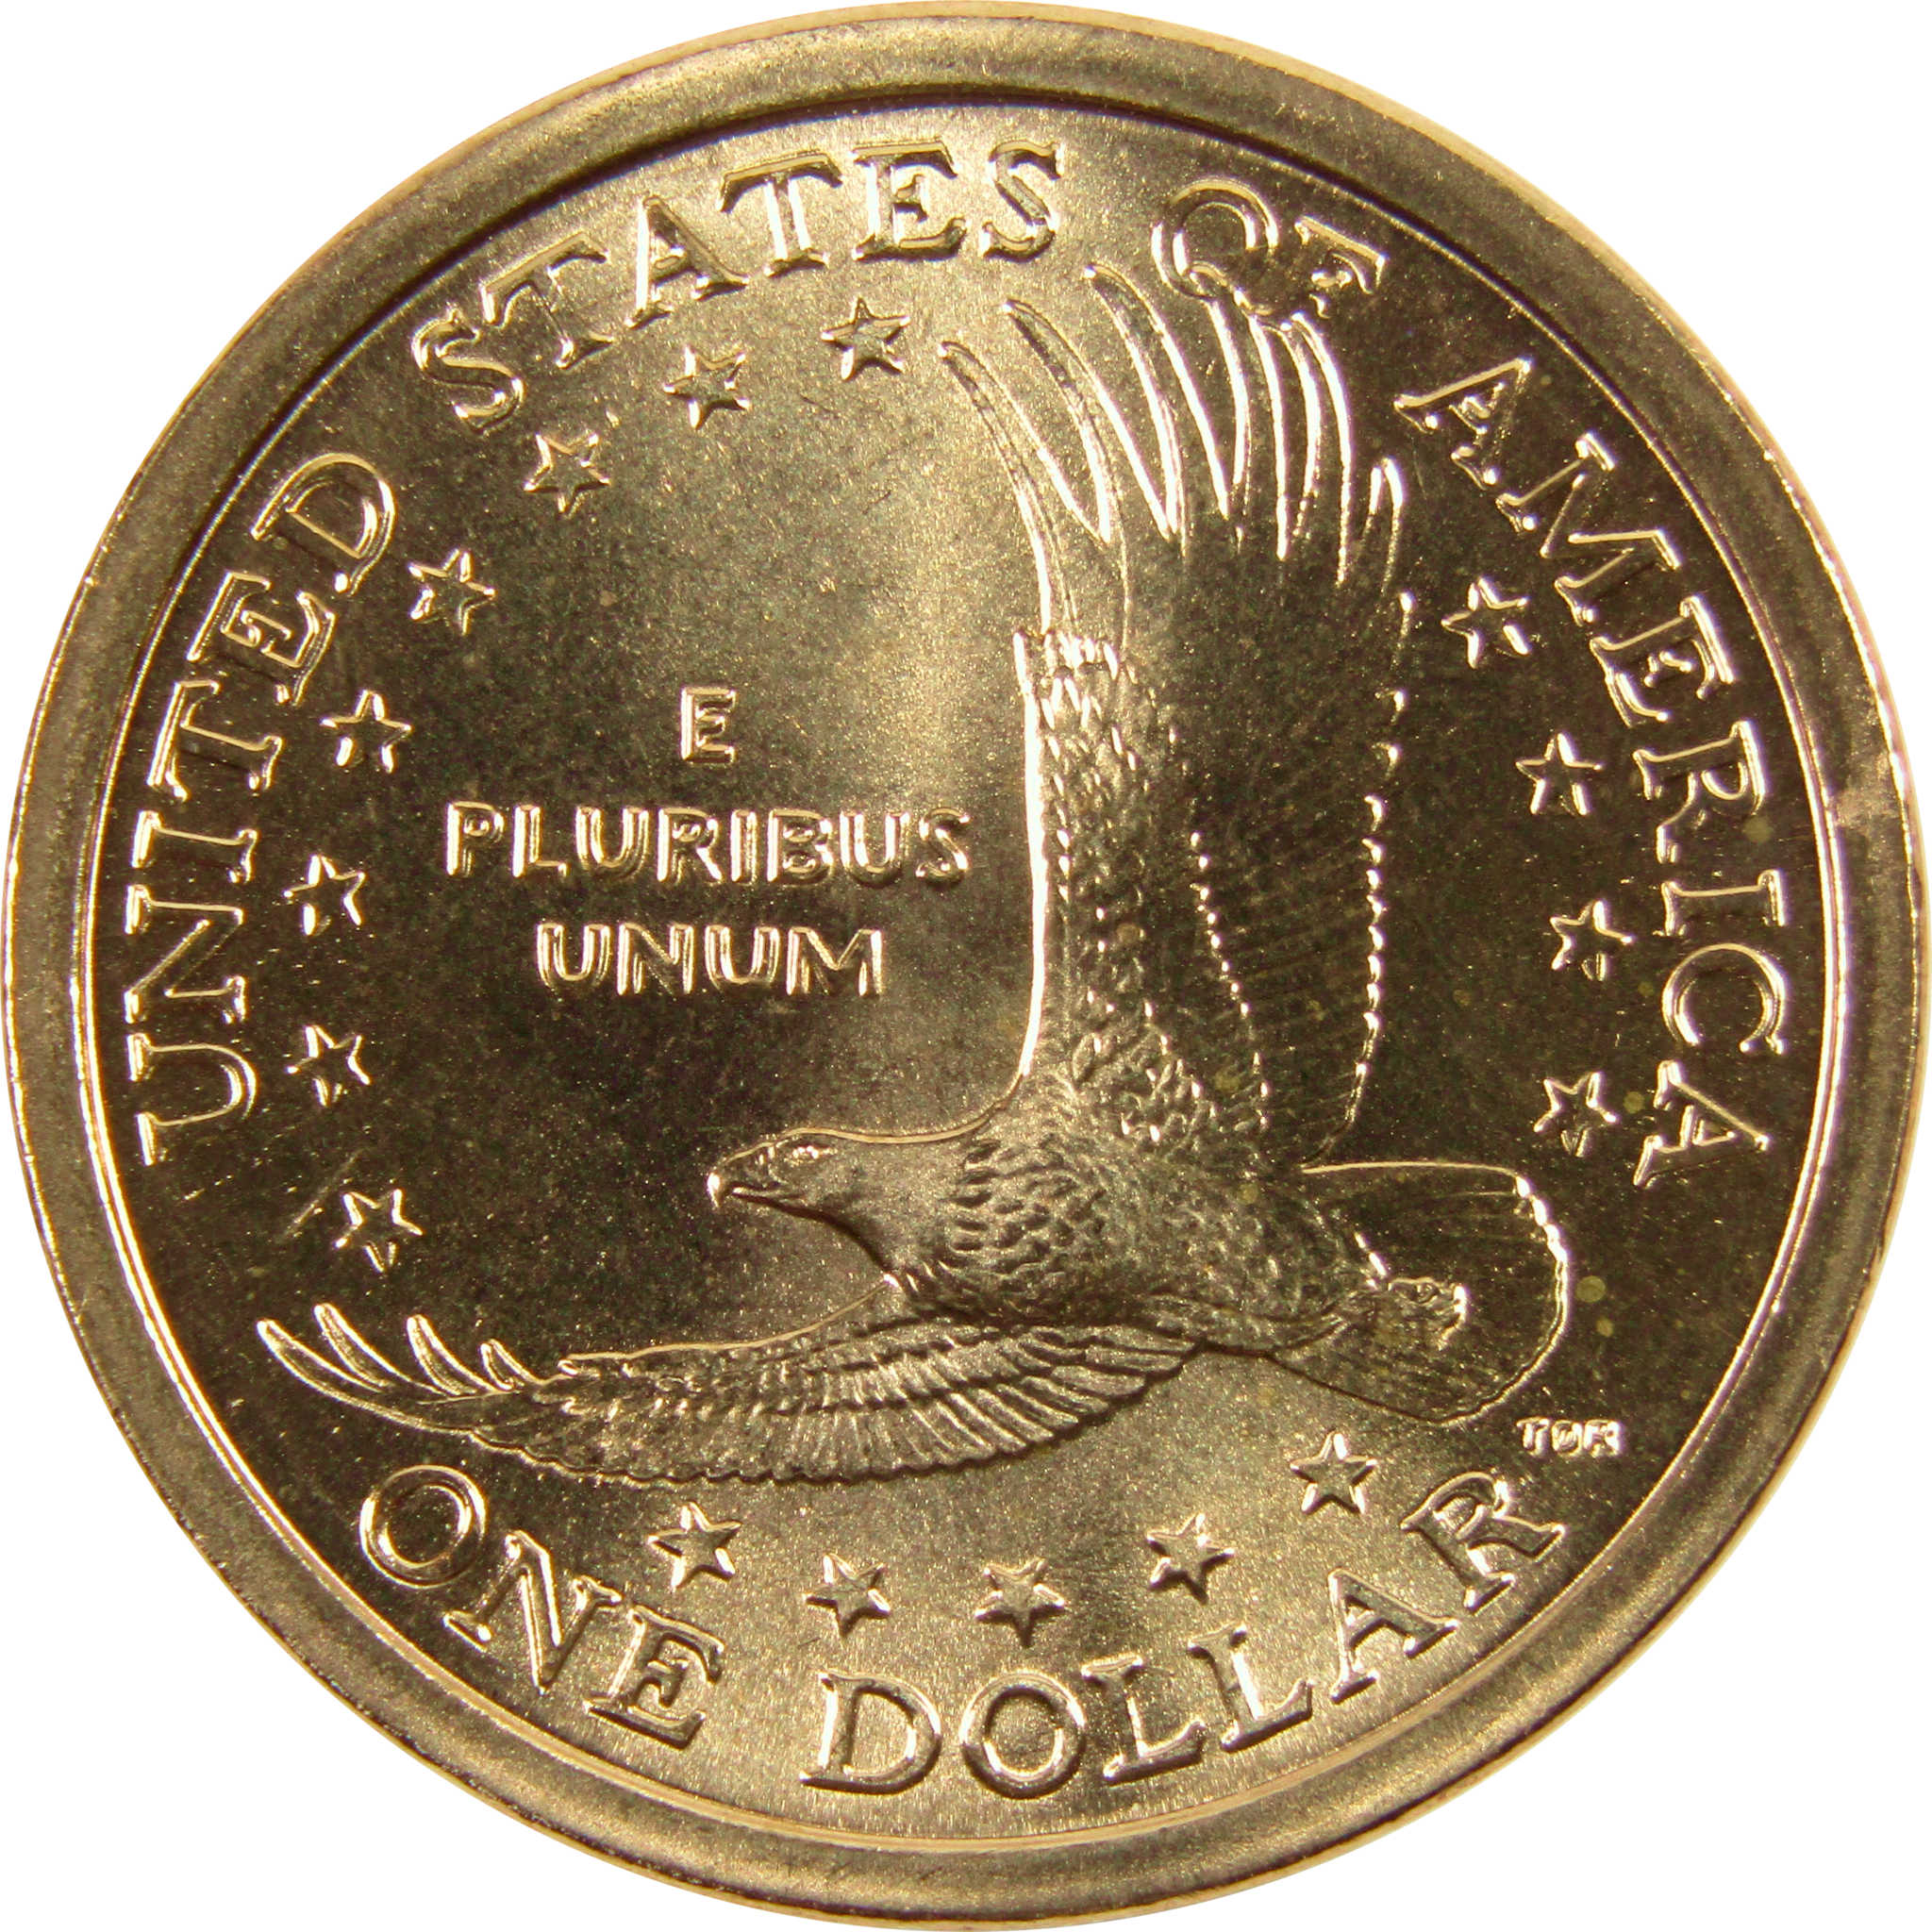 2002 P Sacagawea Native American Dollar BU Uncirculated $1 Coin